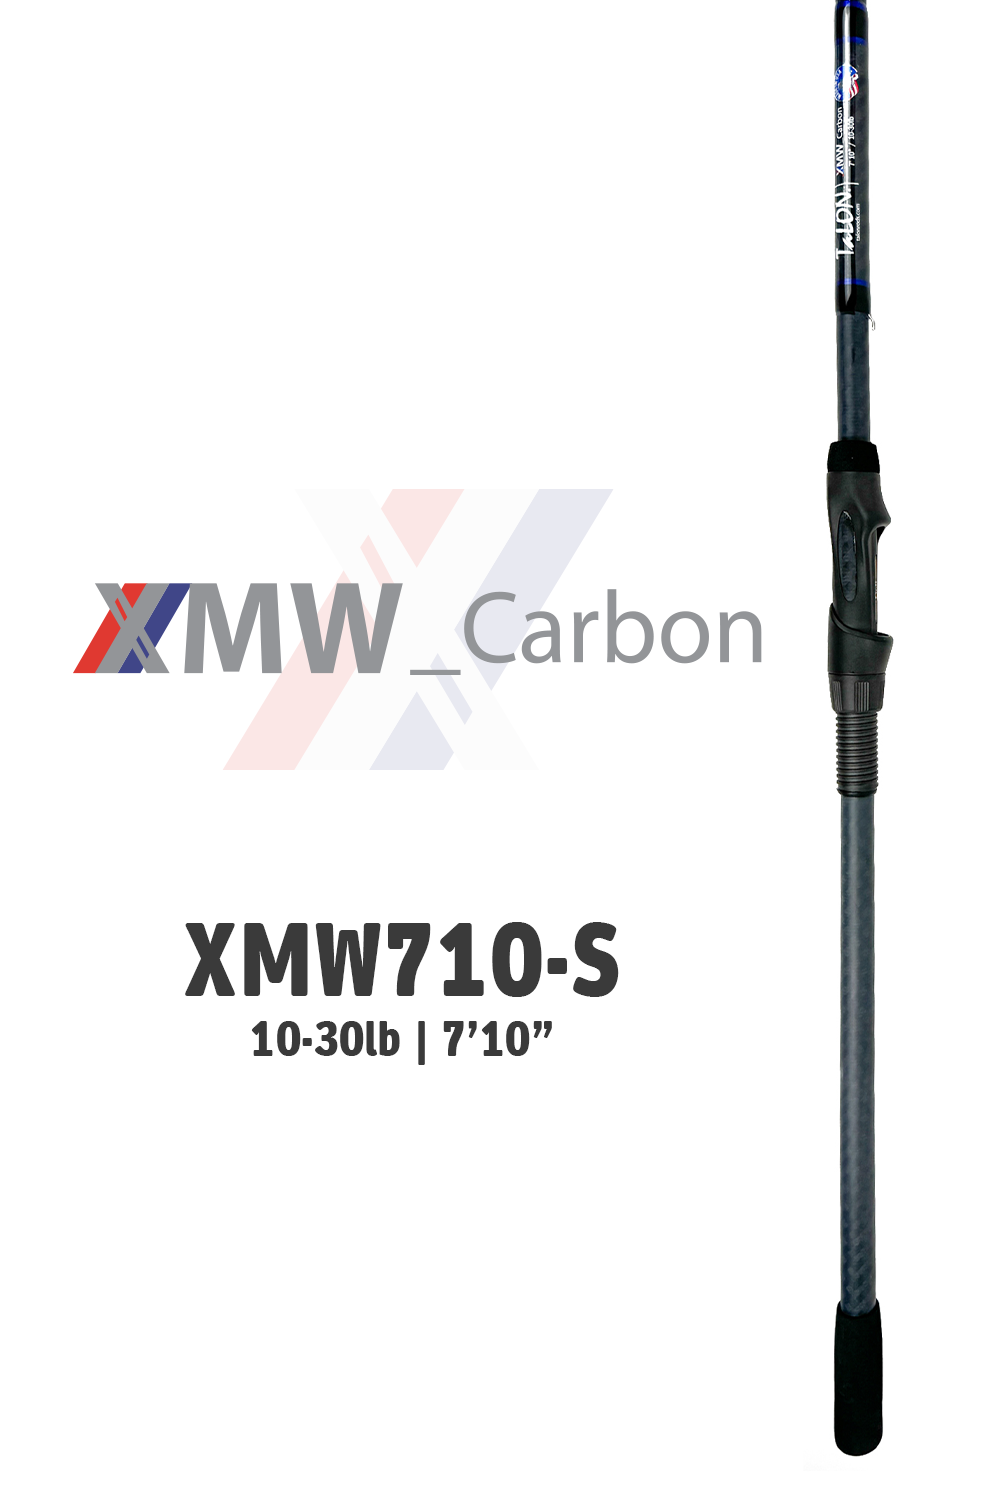 XMW_Carbon - Spinning | 10-30lb - 7'10"